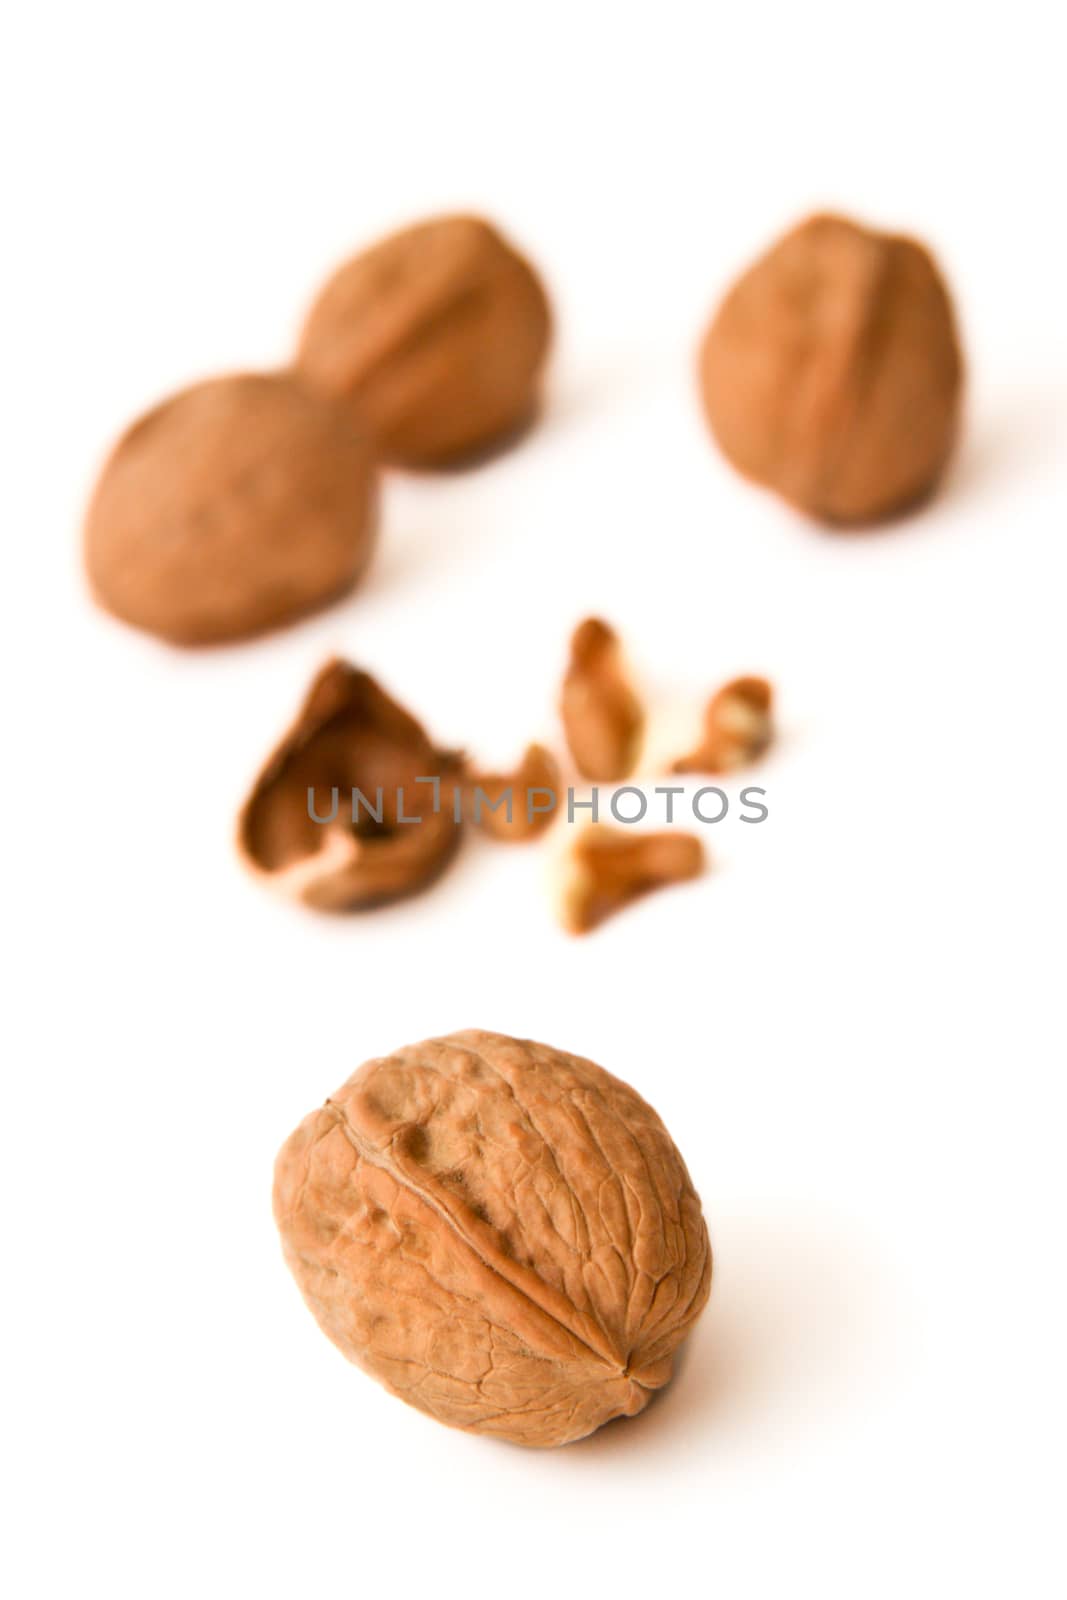 Walnuts on white background